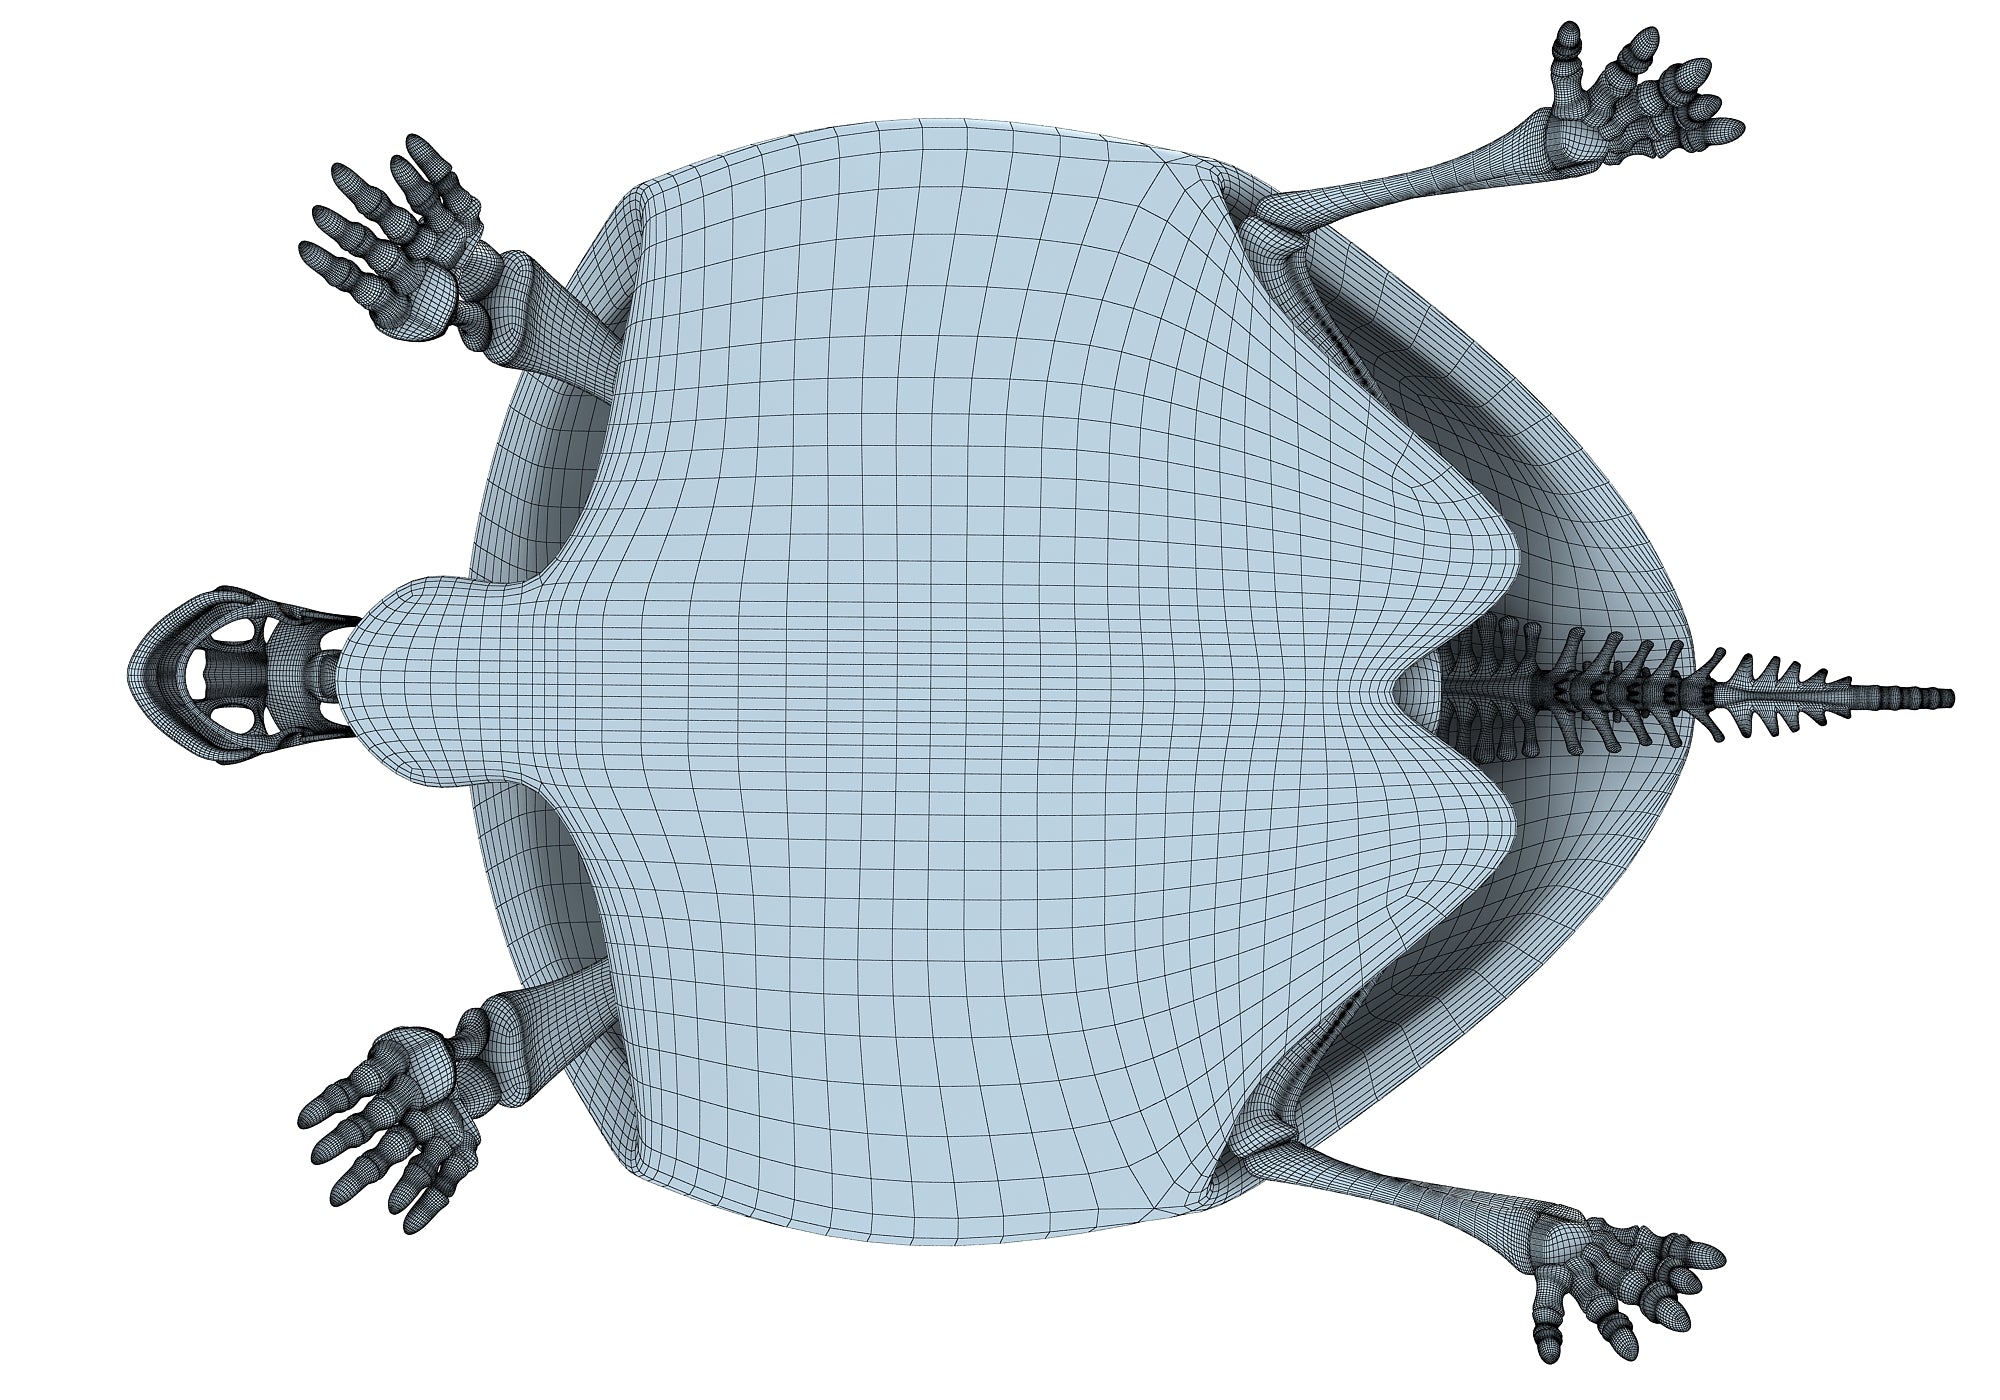 Turtle Skeleton 3D Model